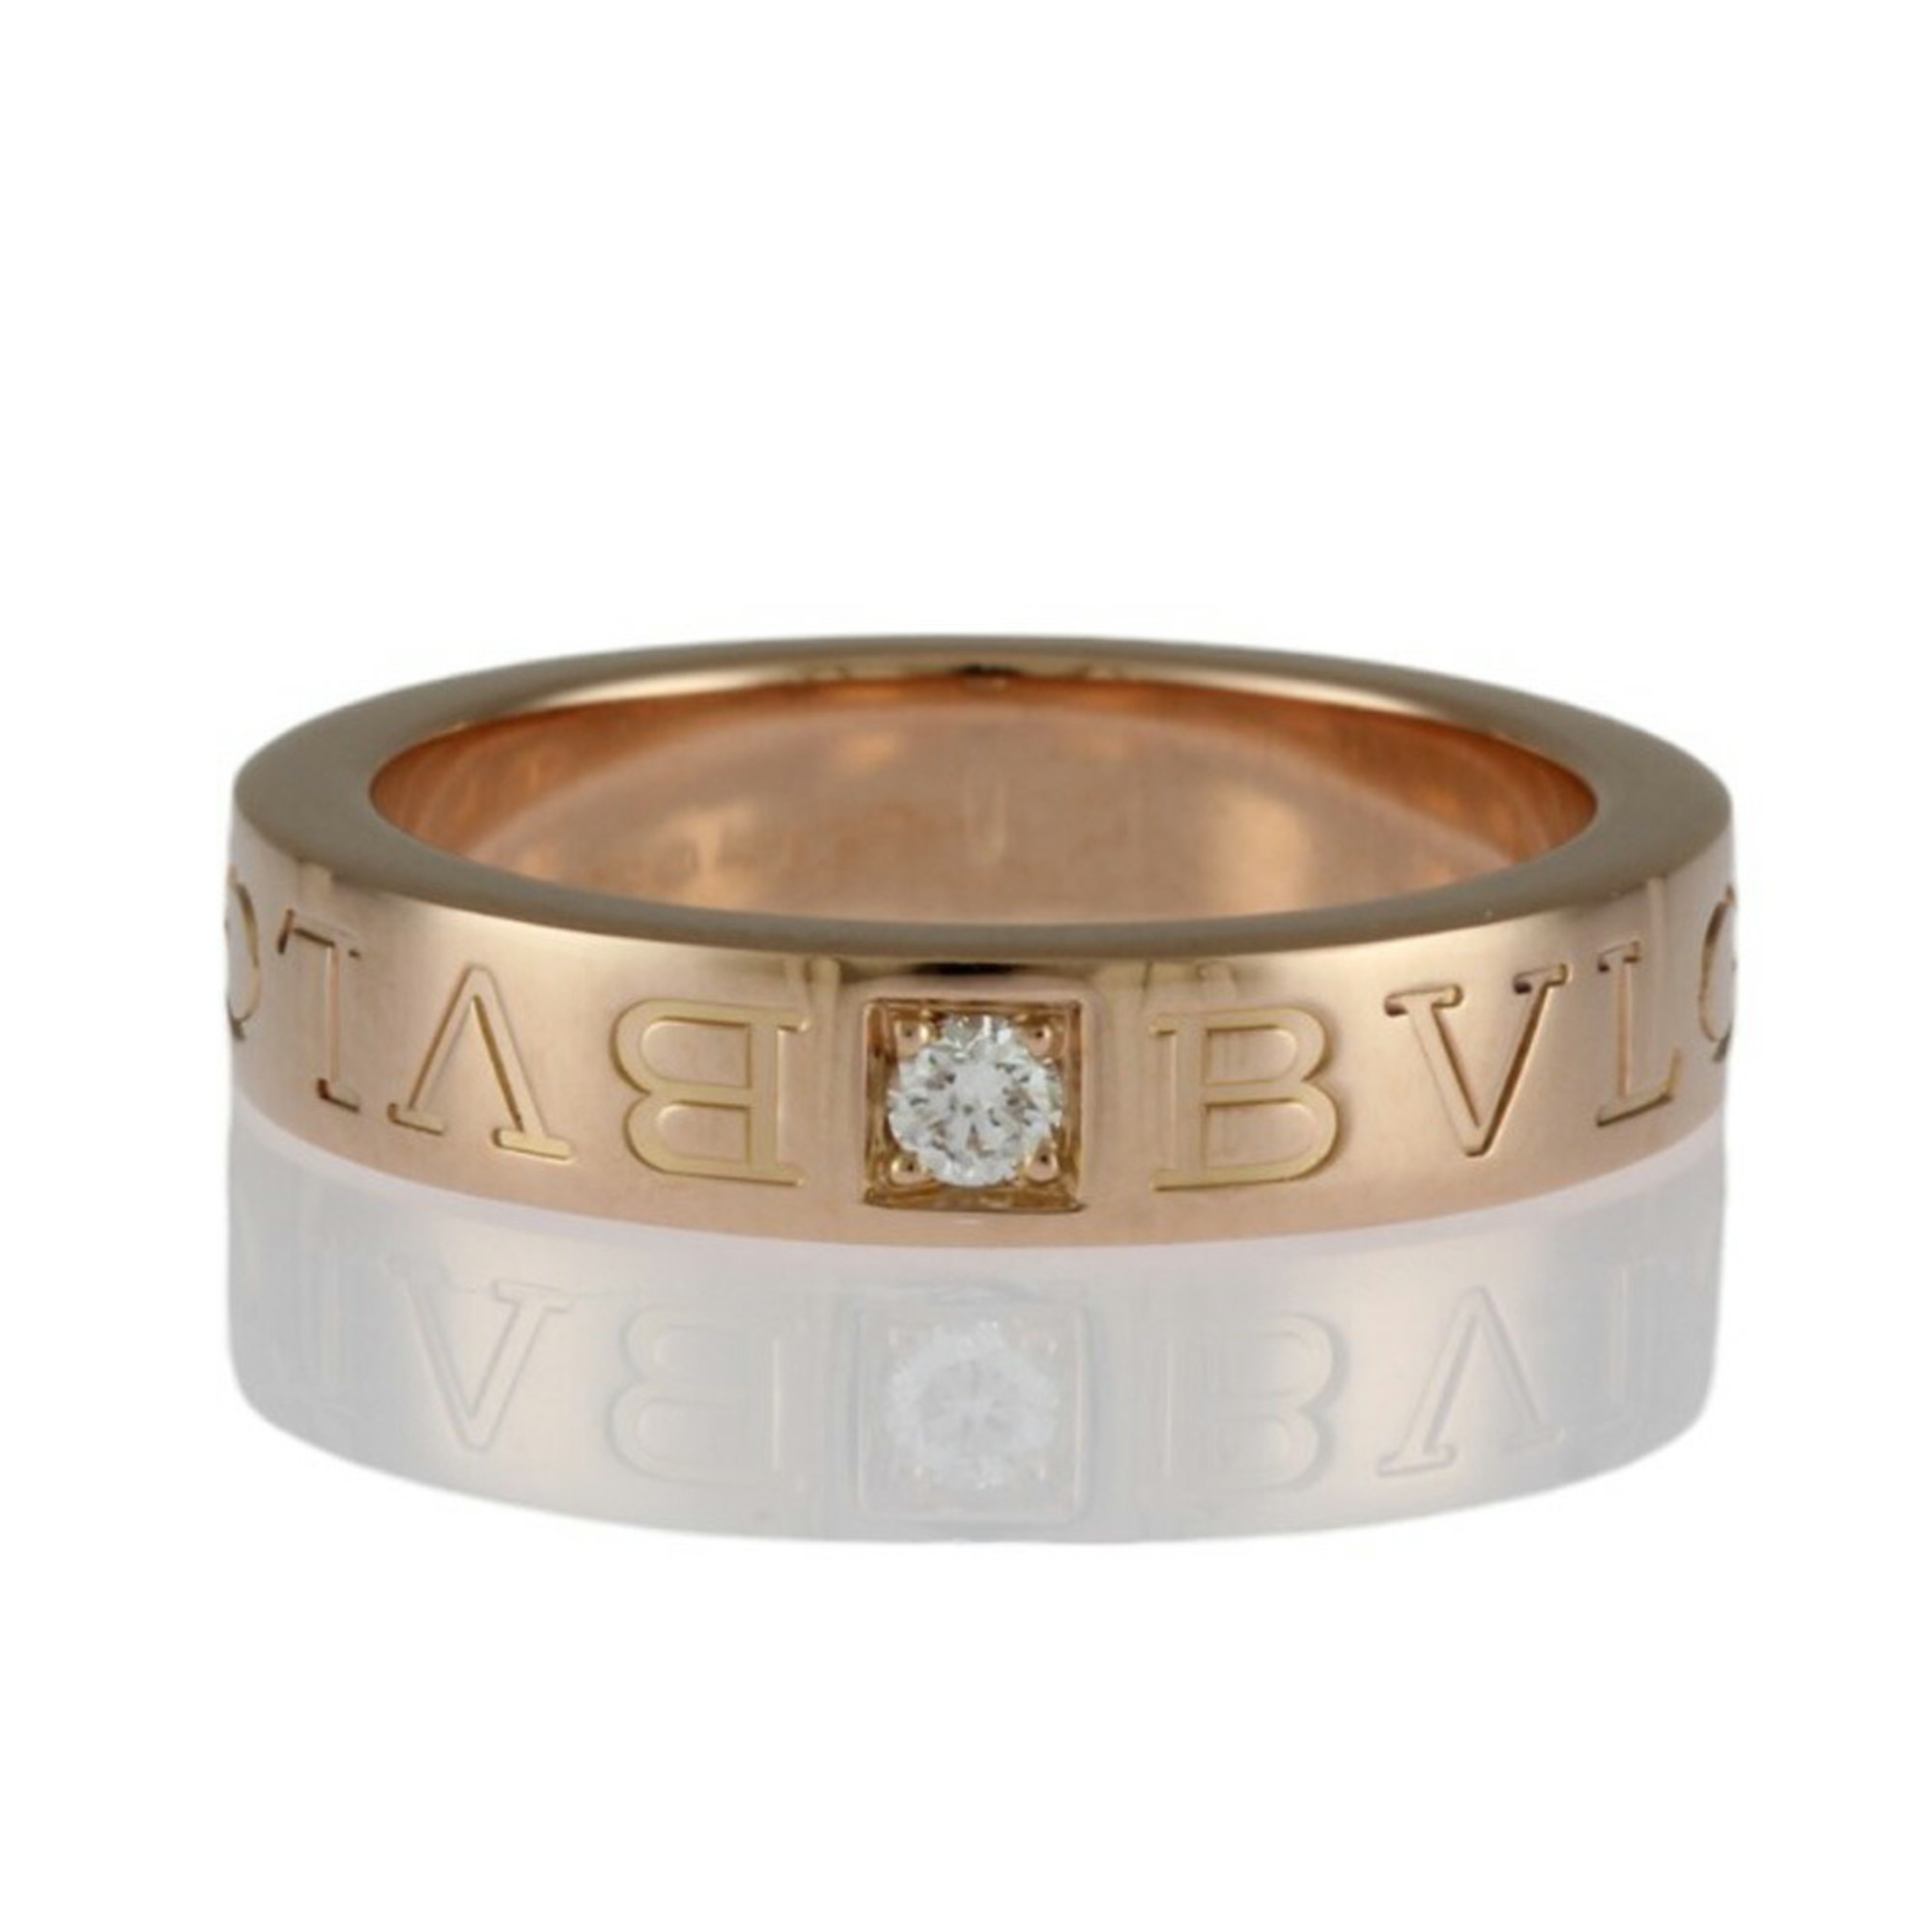 BVLGARI Ring Size 8.5 18K Diamond Women's